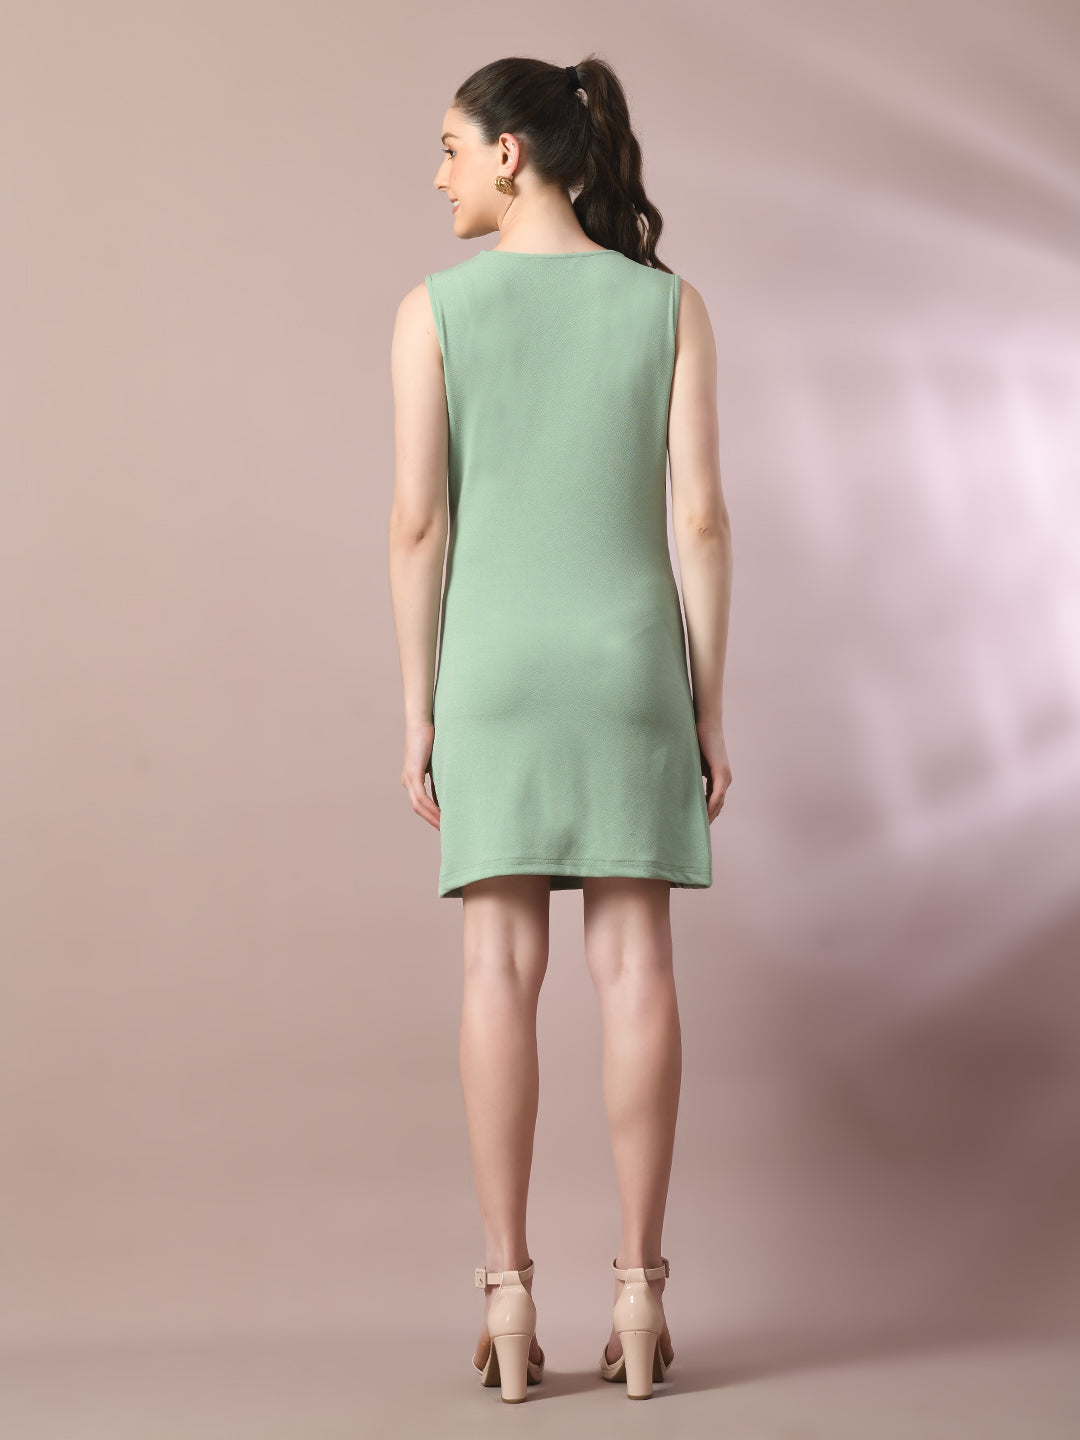 Women's  Sea Green Solid Cowl Neck Bodycon Party Dress  - Myshka